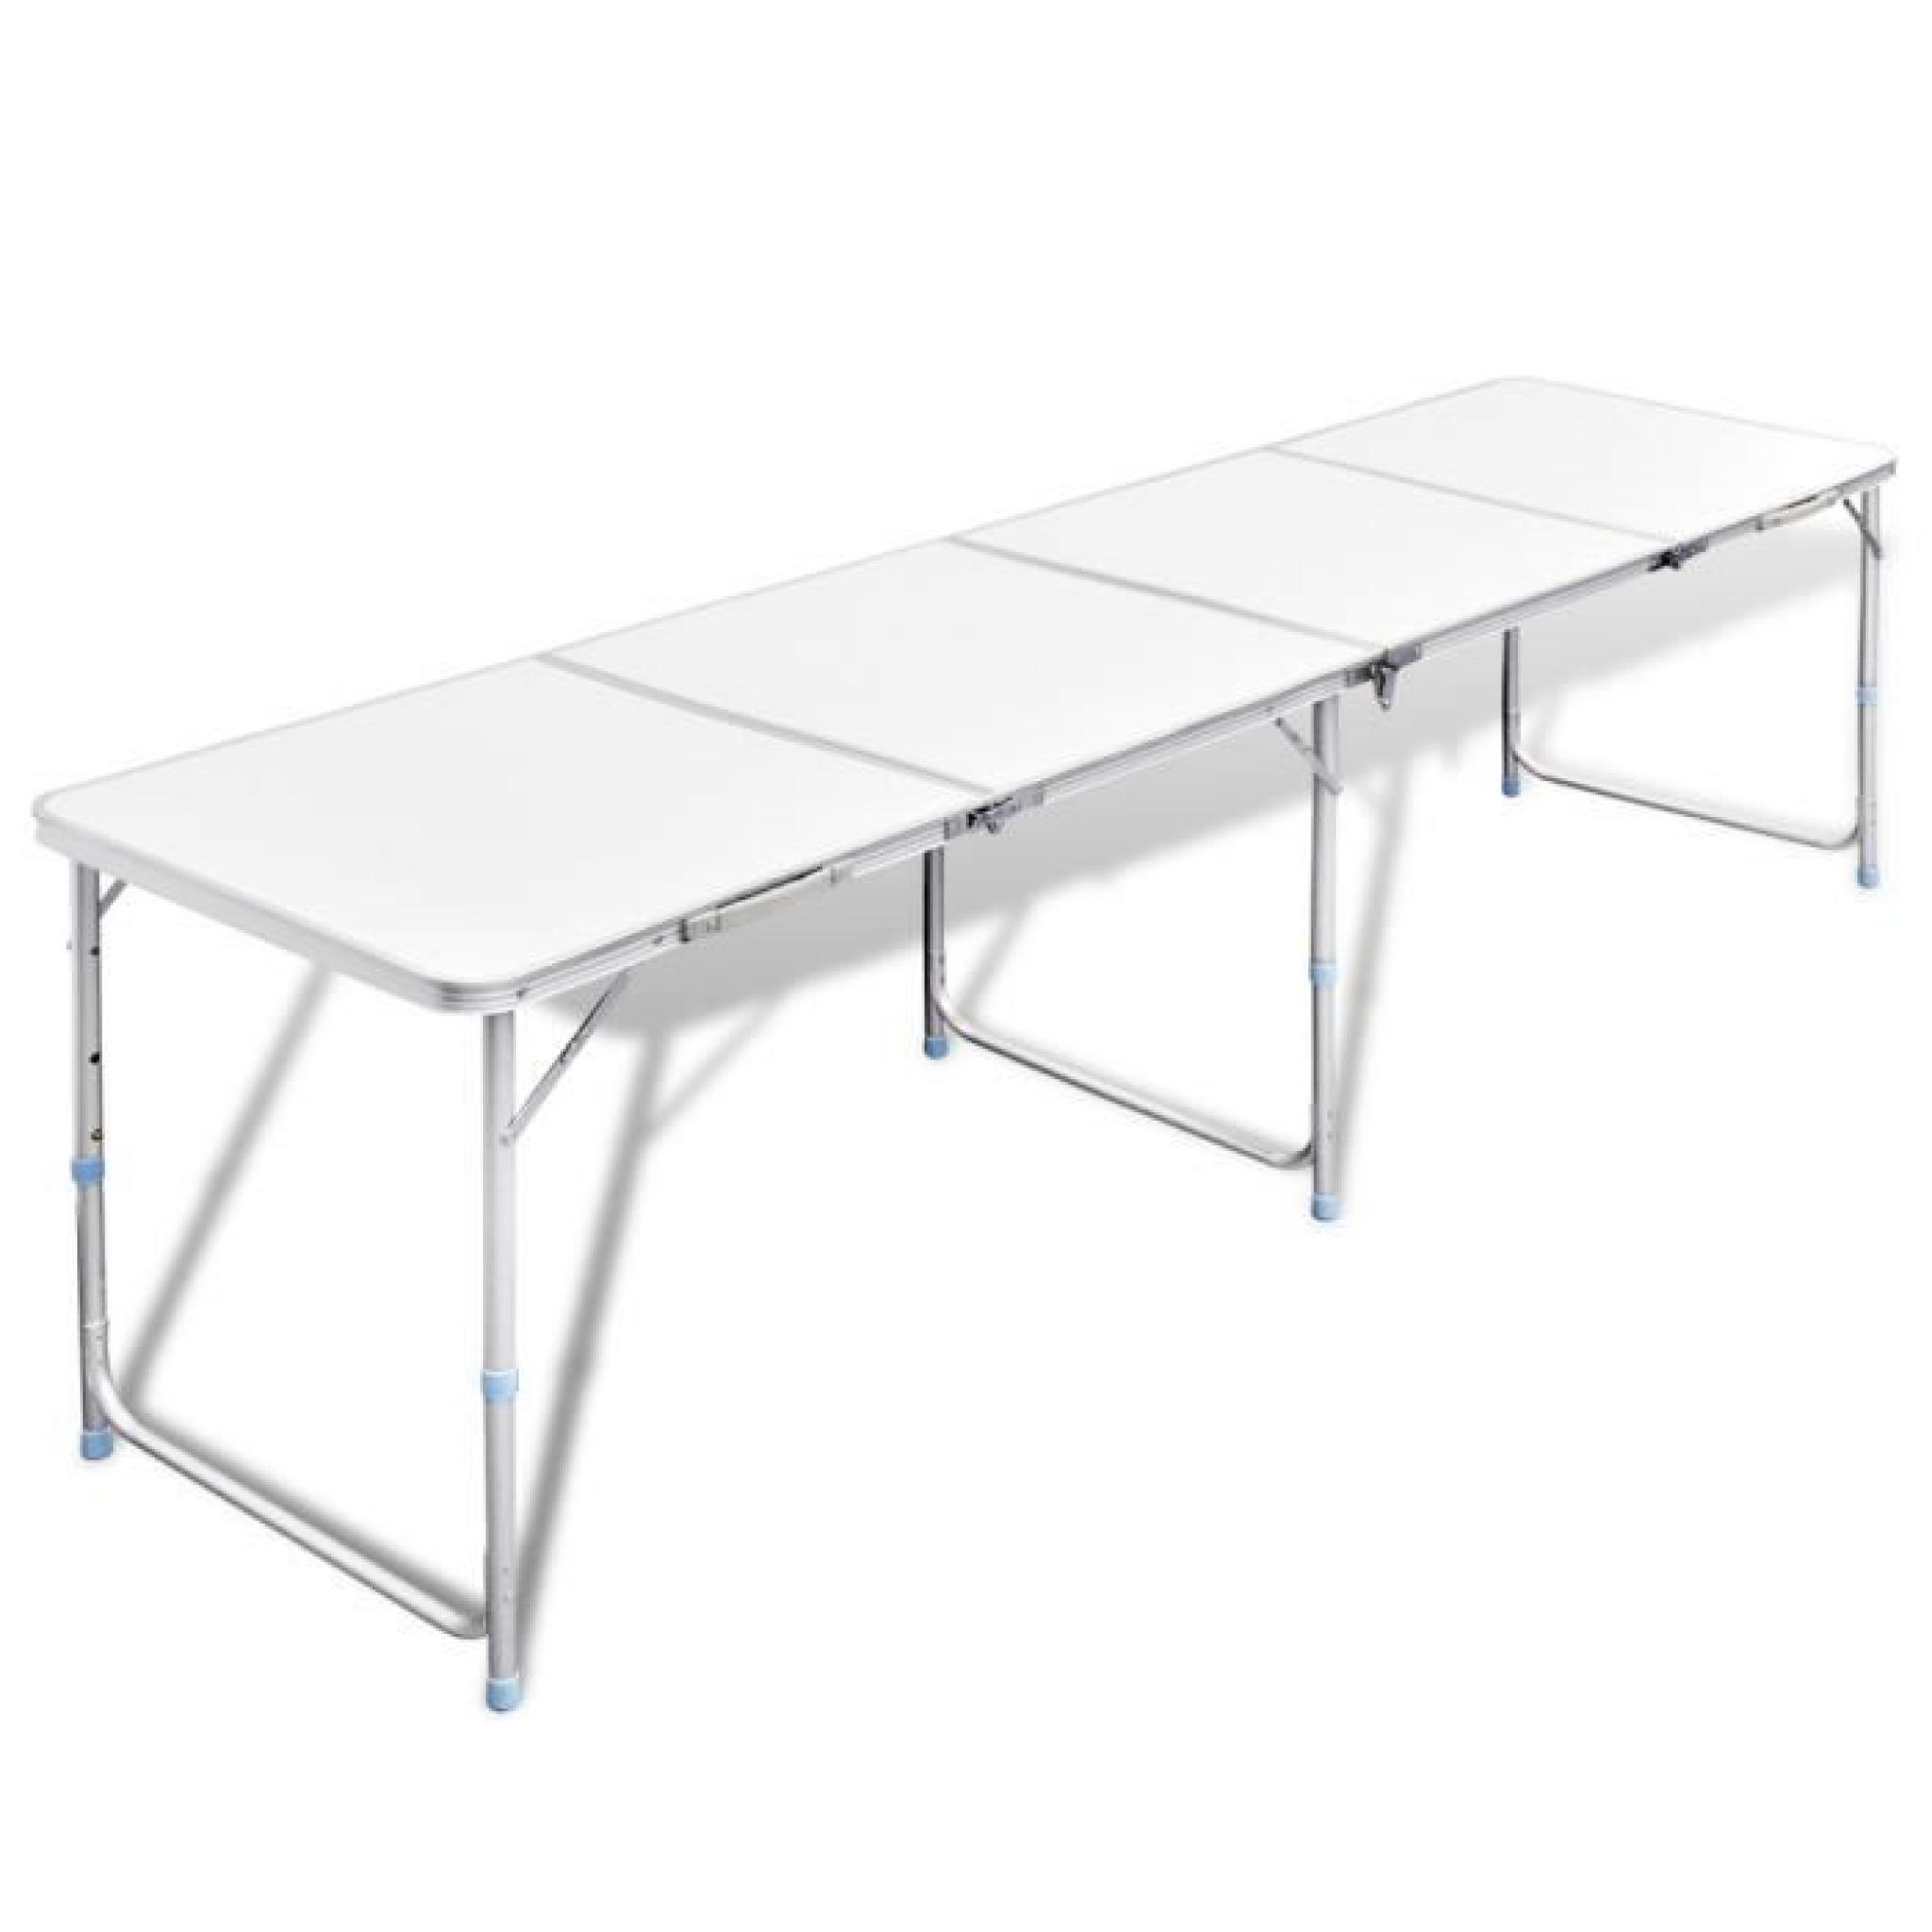 Table pliante de camping en aluminium avec hauteur ajustable MAJA+